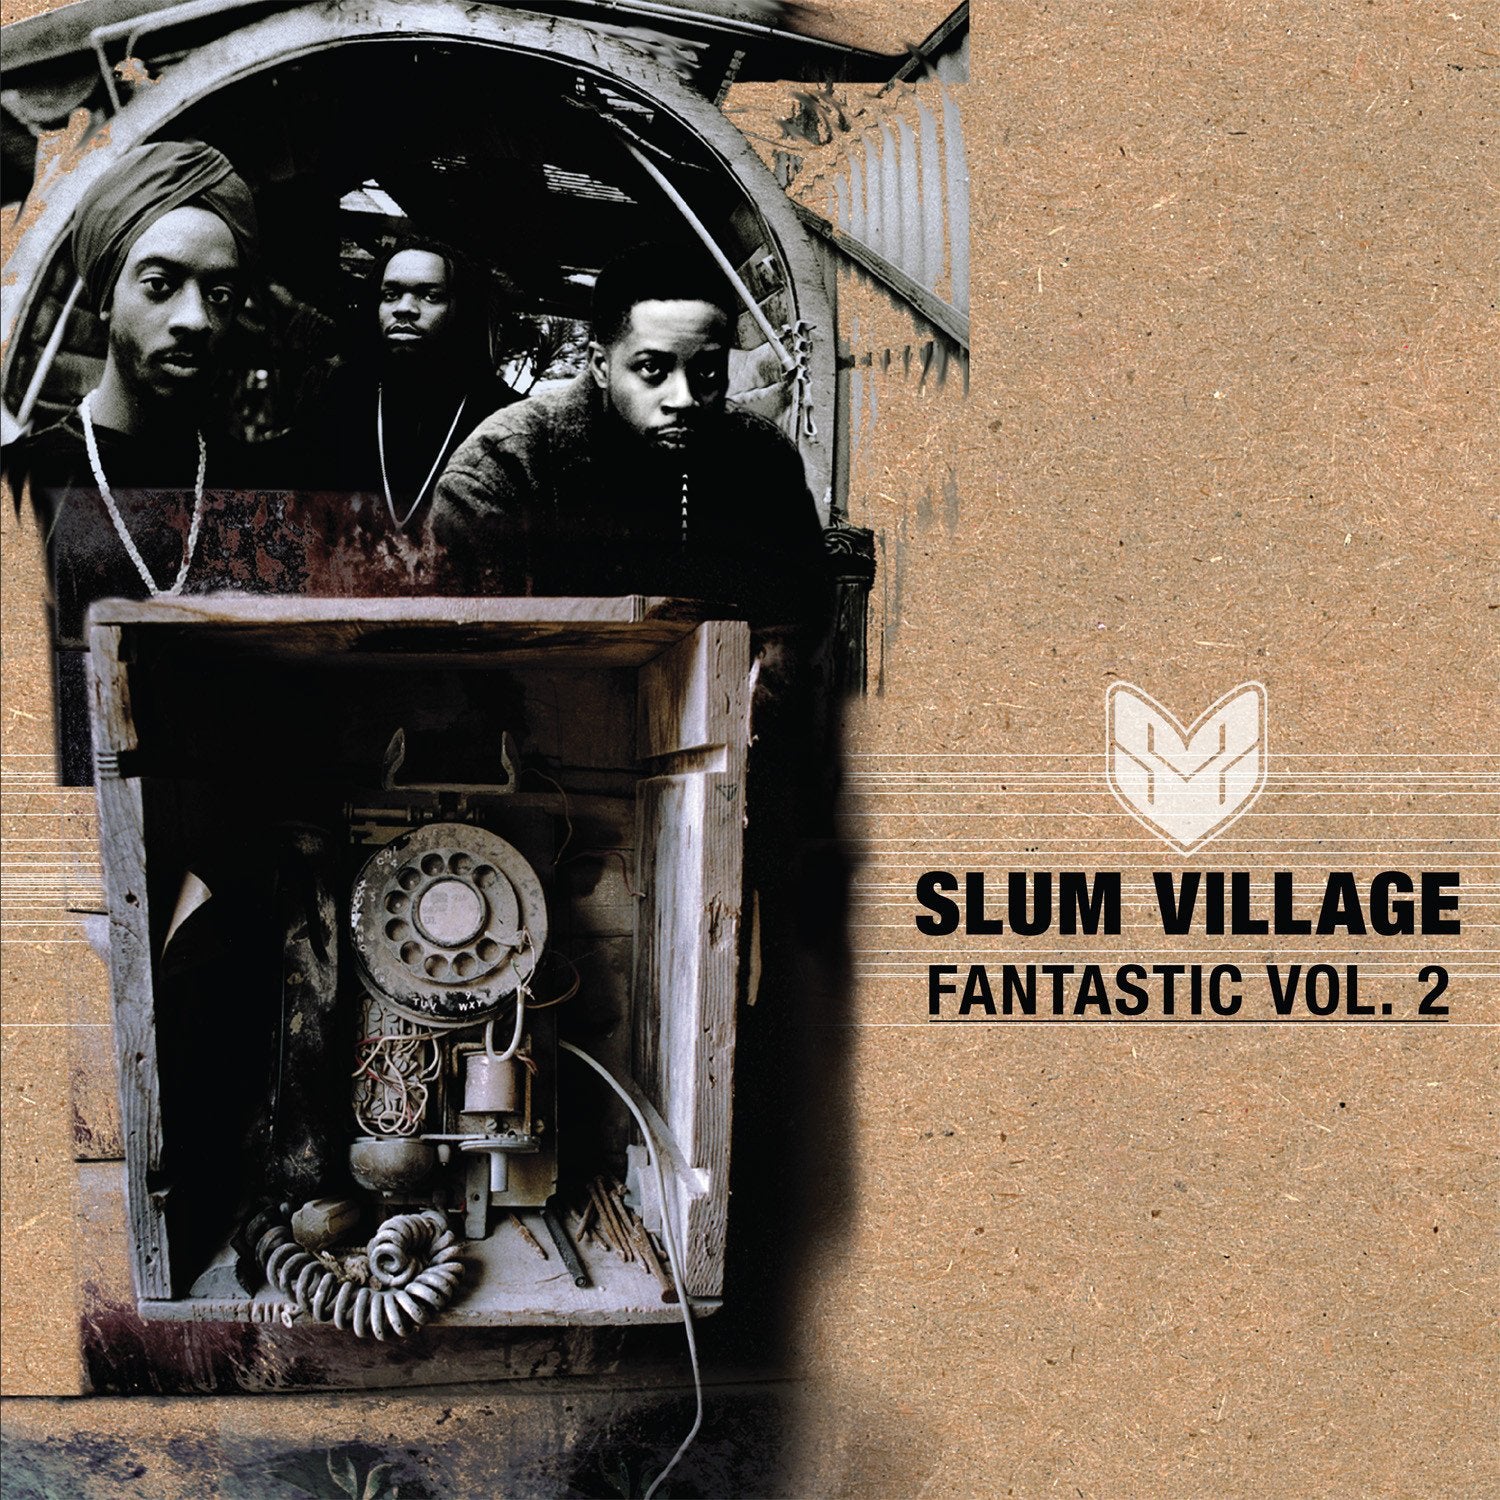 fantastic vol 2 slum village vinyl record on the jungle floor